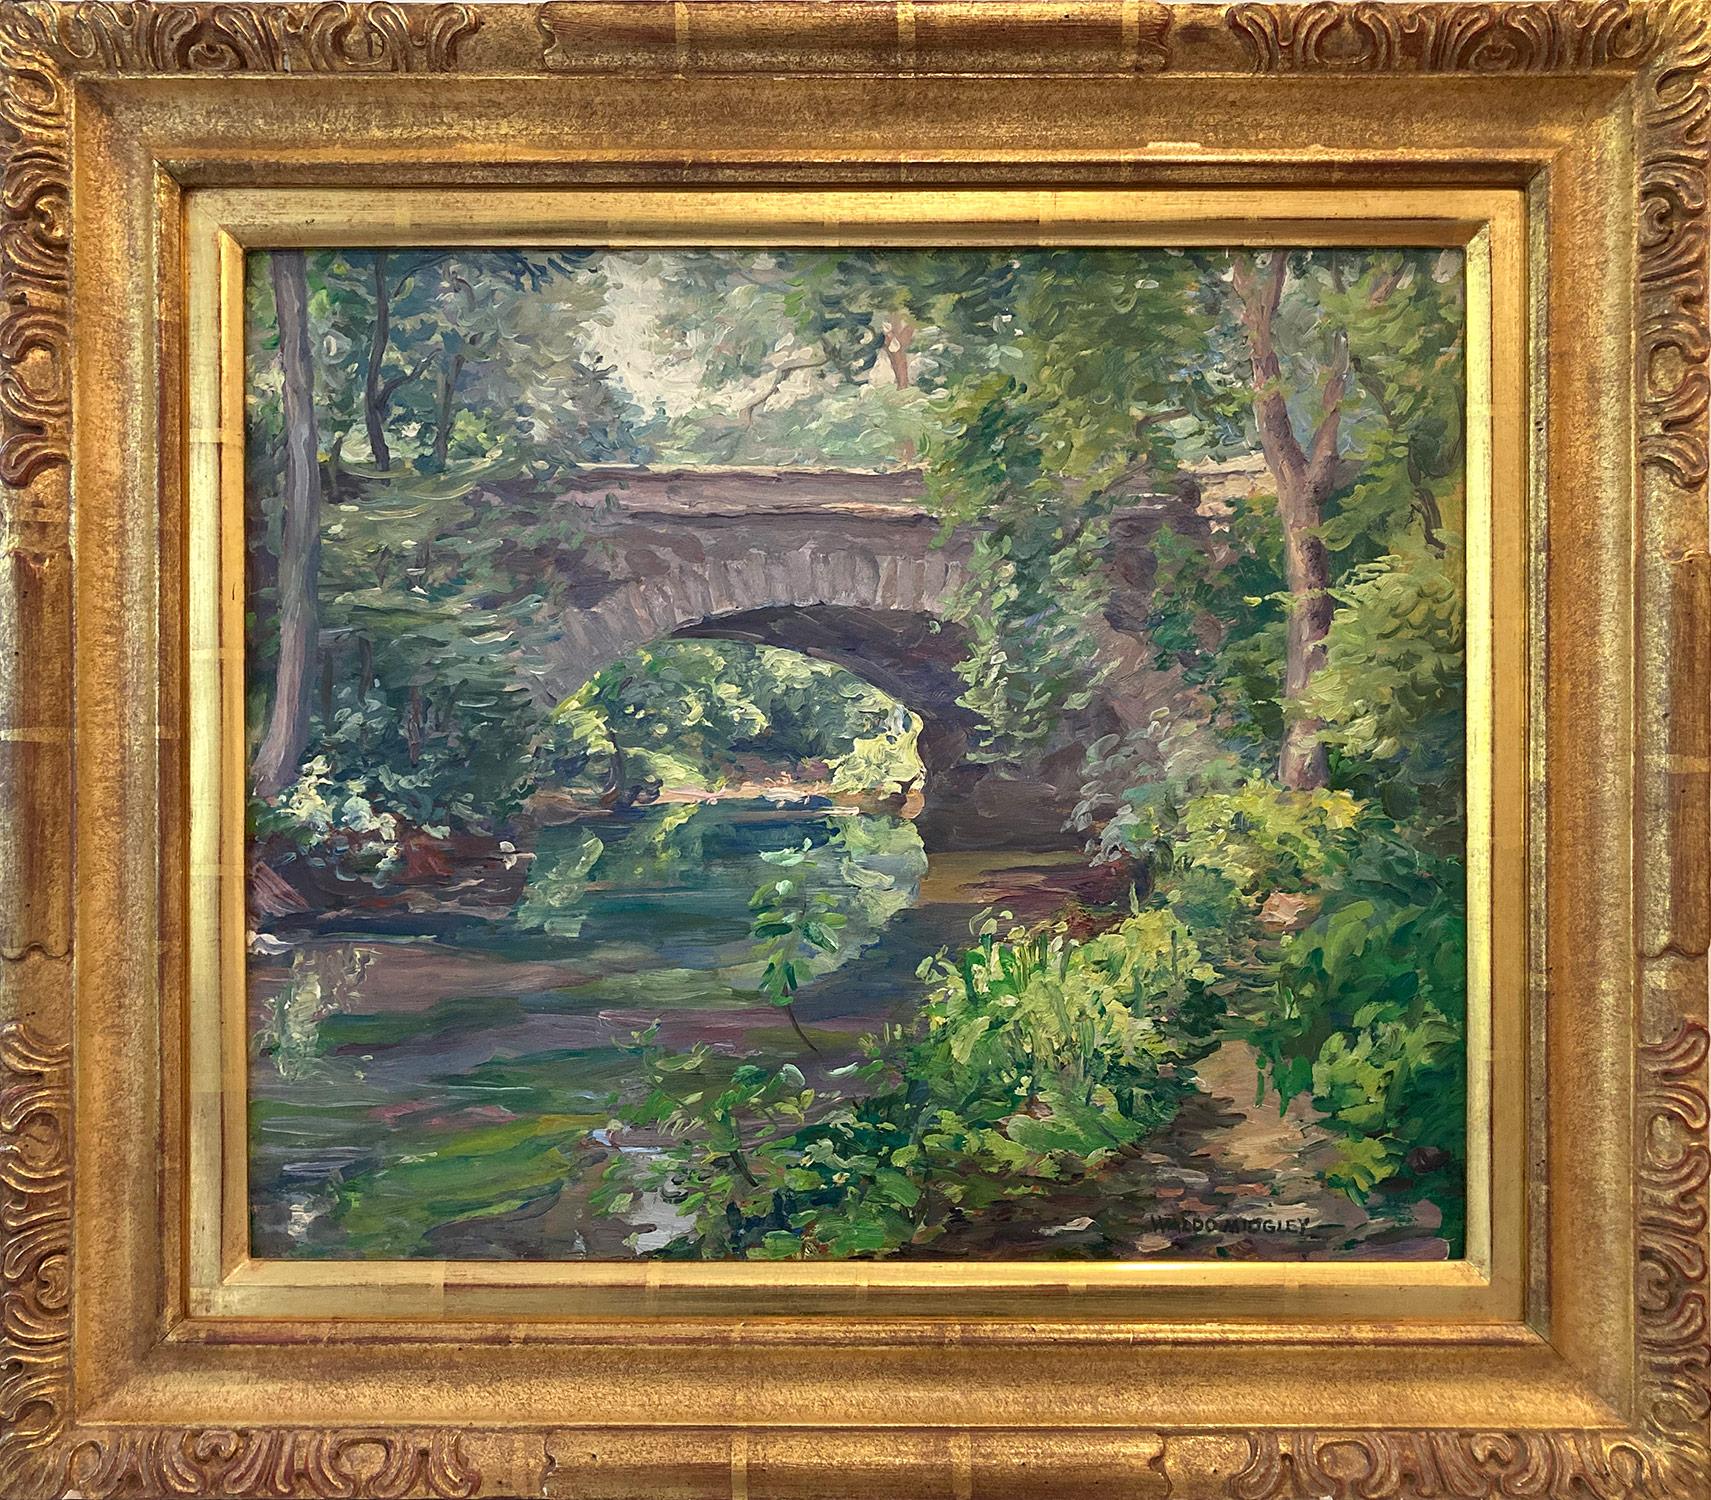 Waldo Park Midgley Landscape Painting - "View of the Bridge at Central Park " Impressionist Lush Oil Painting Landscape 